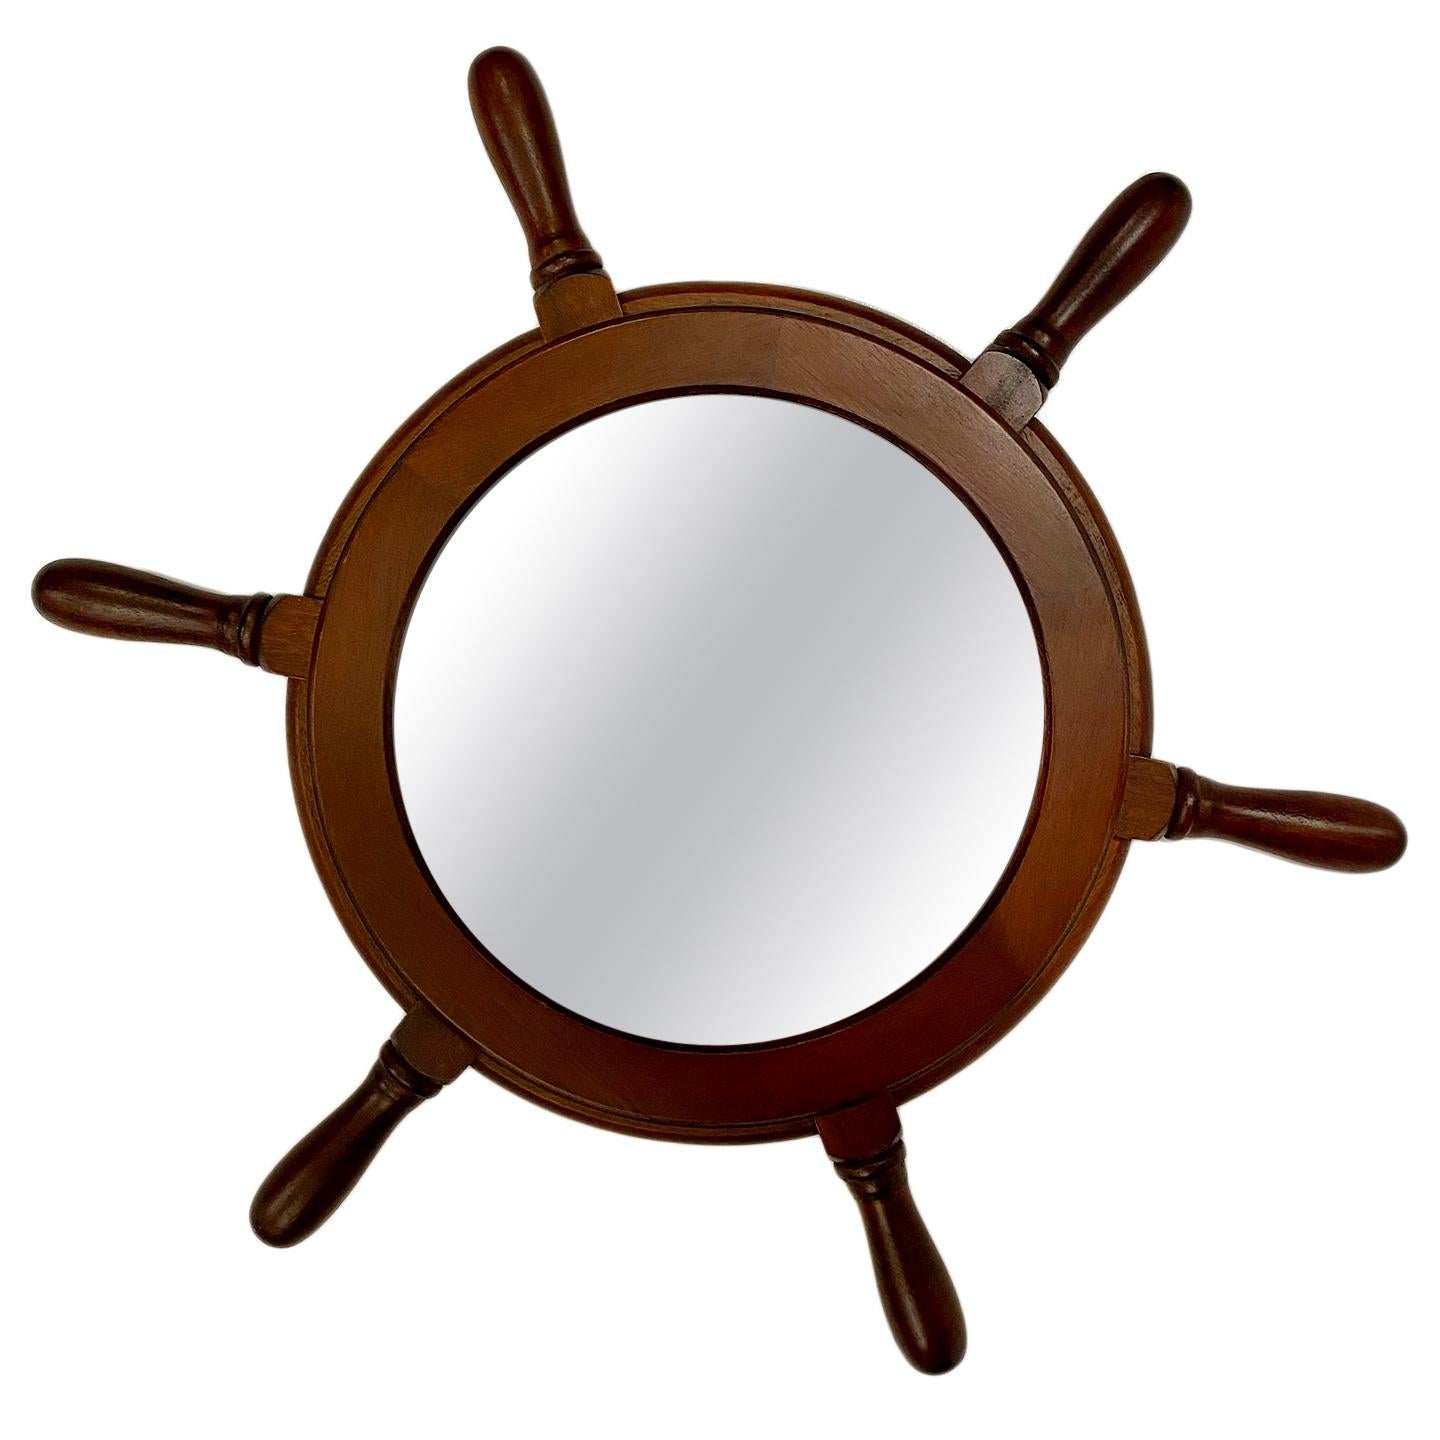 Ship Steering Wheel Mirror At 1stdibs, Ship Wheel Wall Mirror